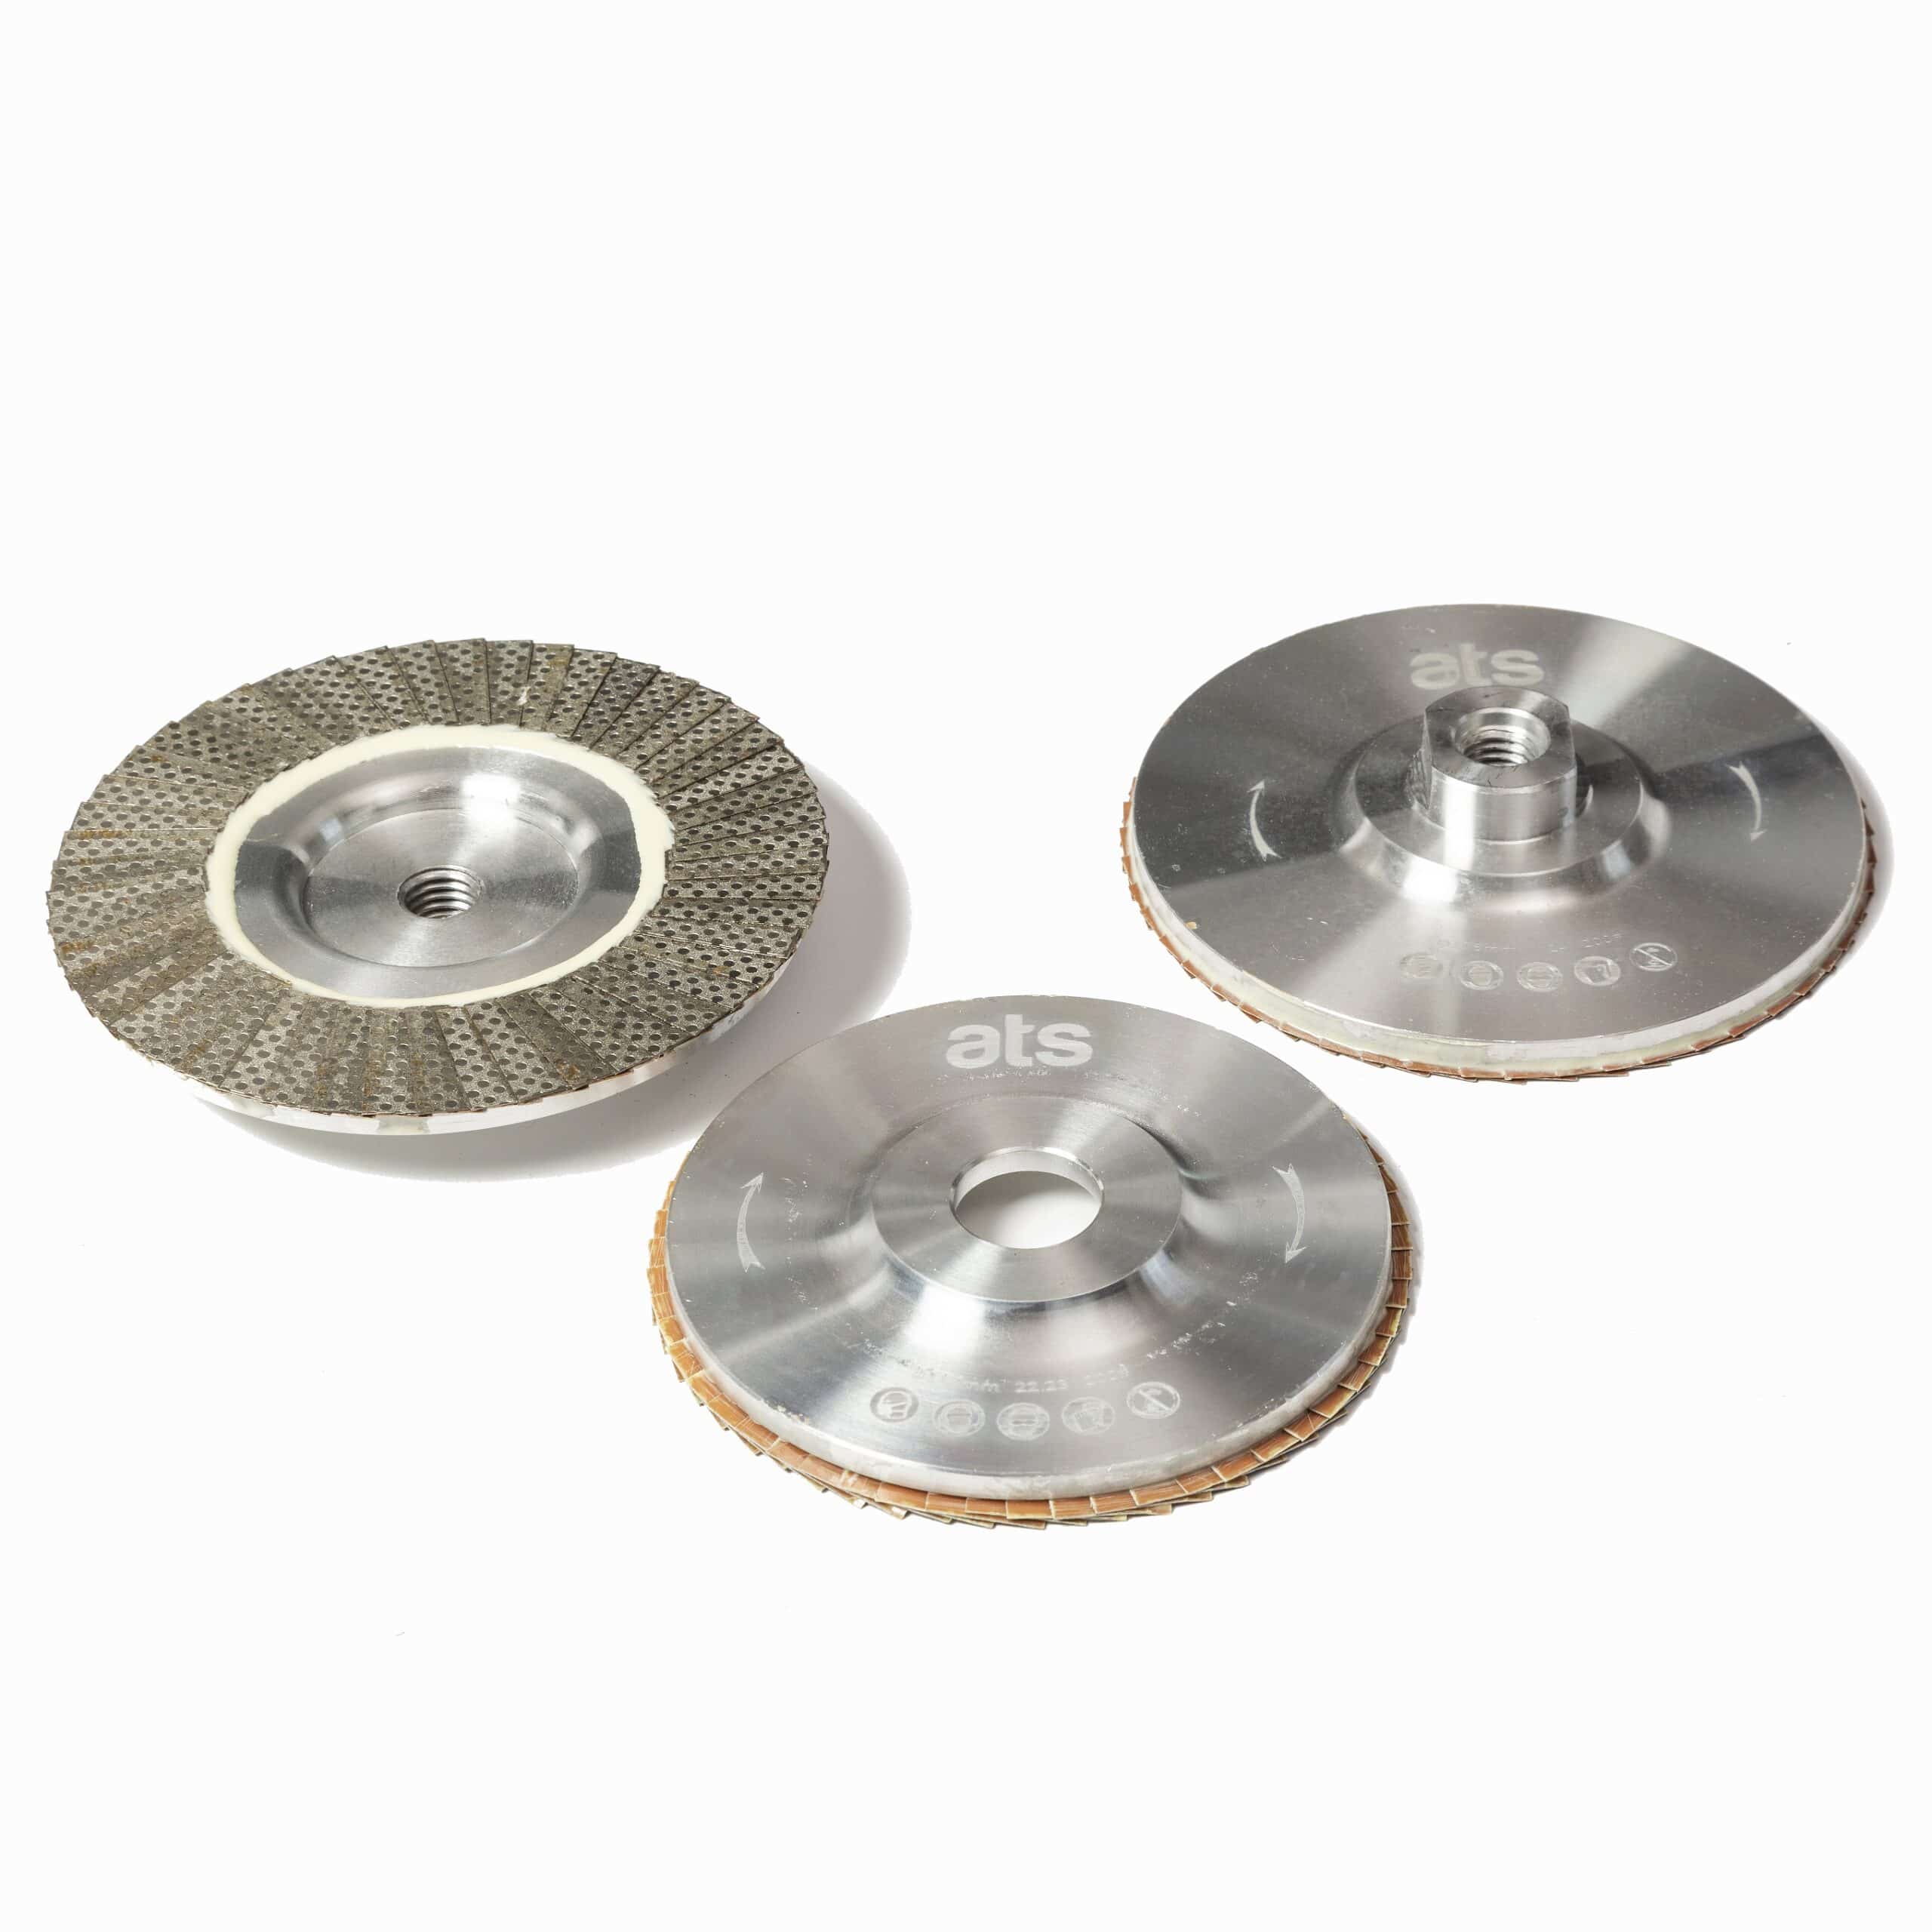 ApplianPar 10Pcs 22mm Diamond Cutting Wheel 20Pcs Rotary Grinding Burr Drill Bits Sets 10Pcs Abrasive Mounted Stone Carving Grinding Wheels Bits 3mm Mandrel 